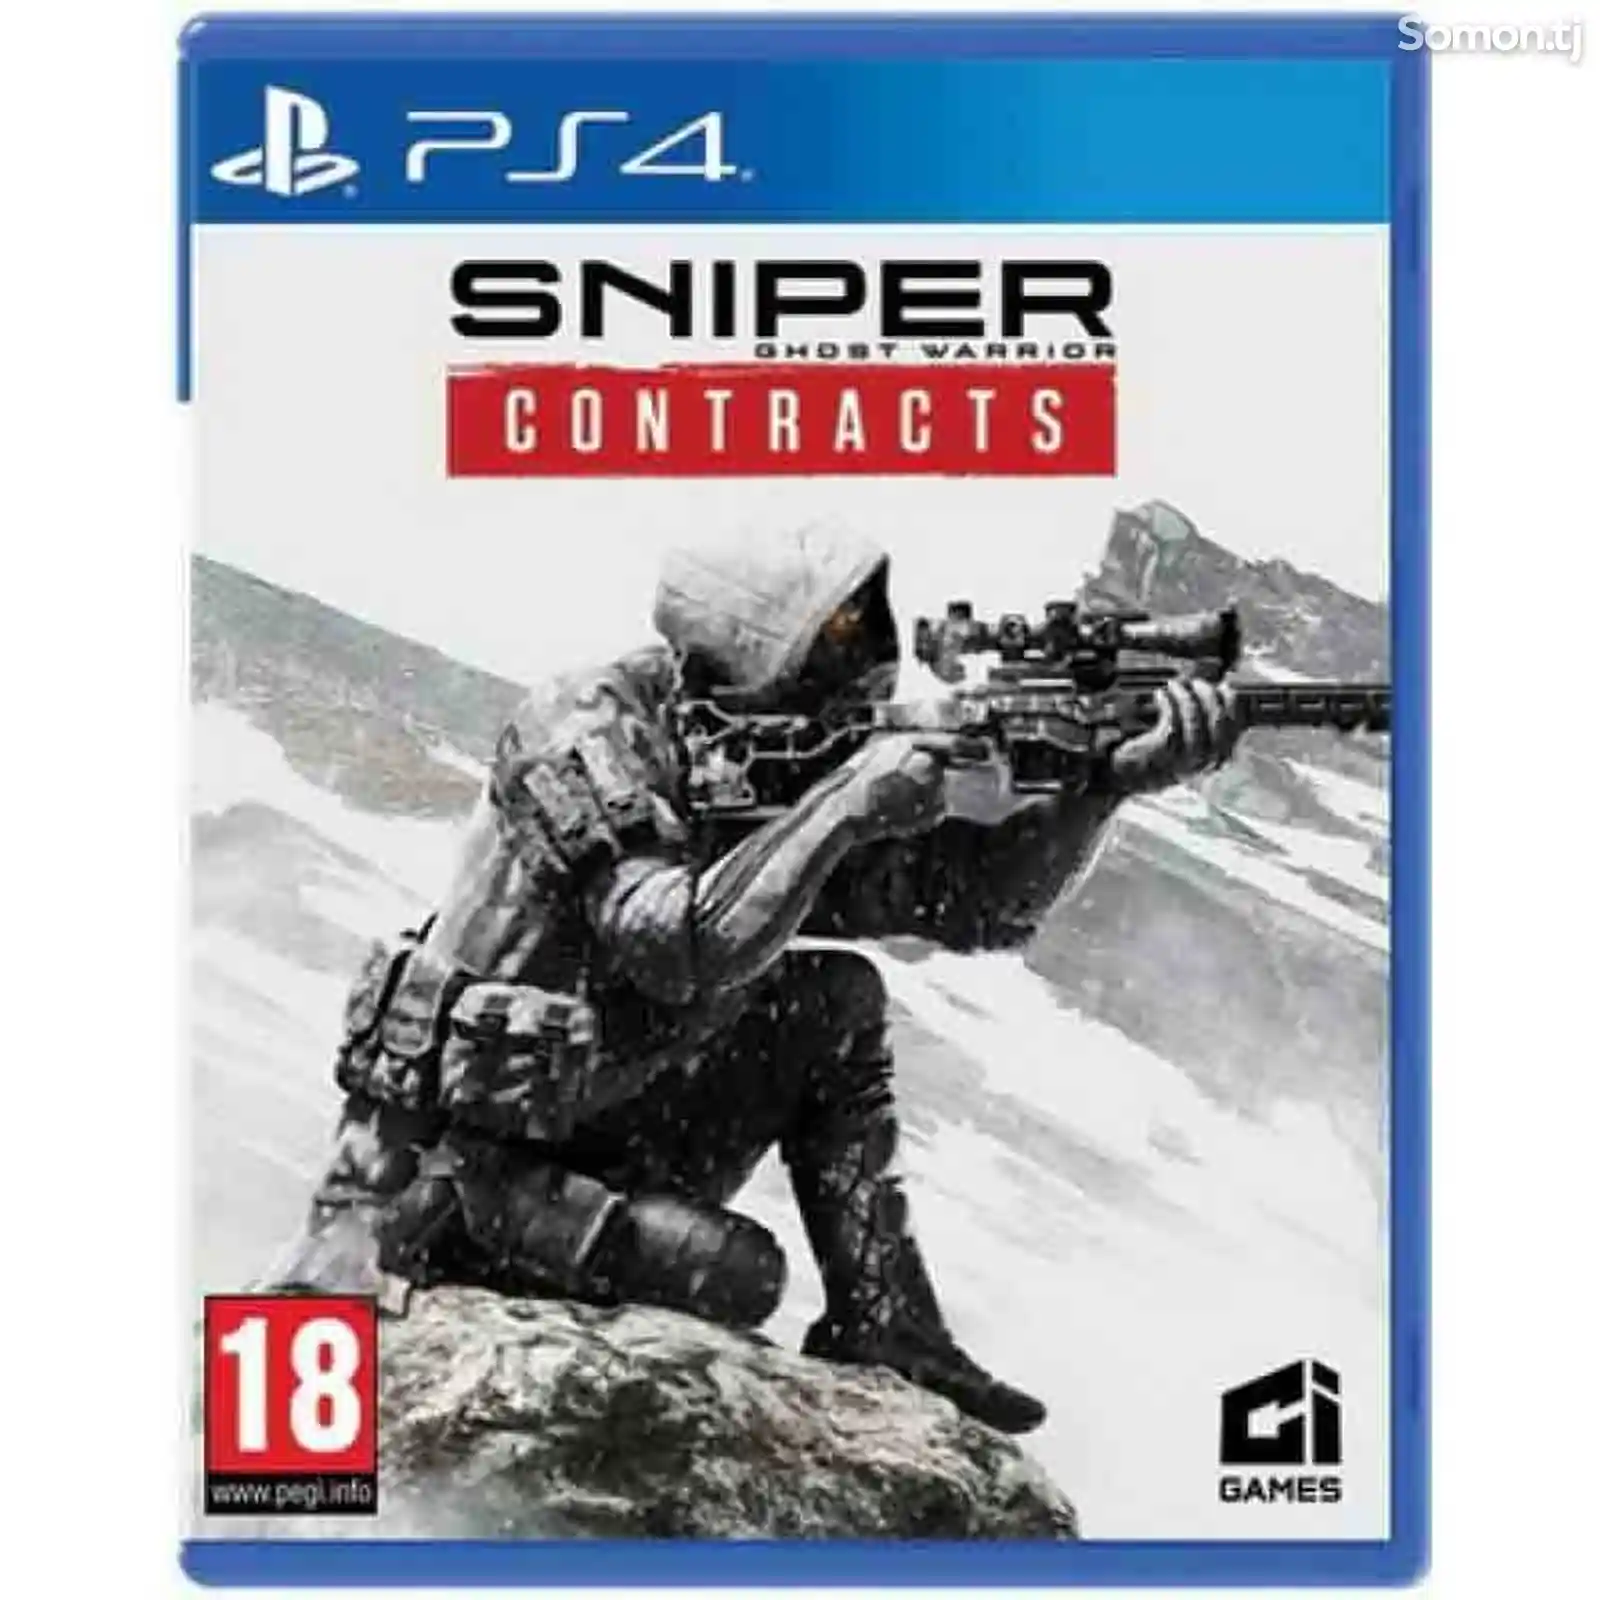 Игра Sniper ghost warrior contract для PS-4 / 5.05 / 6.72 / 7.02 / 7.55 / 9.00 /-1